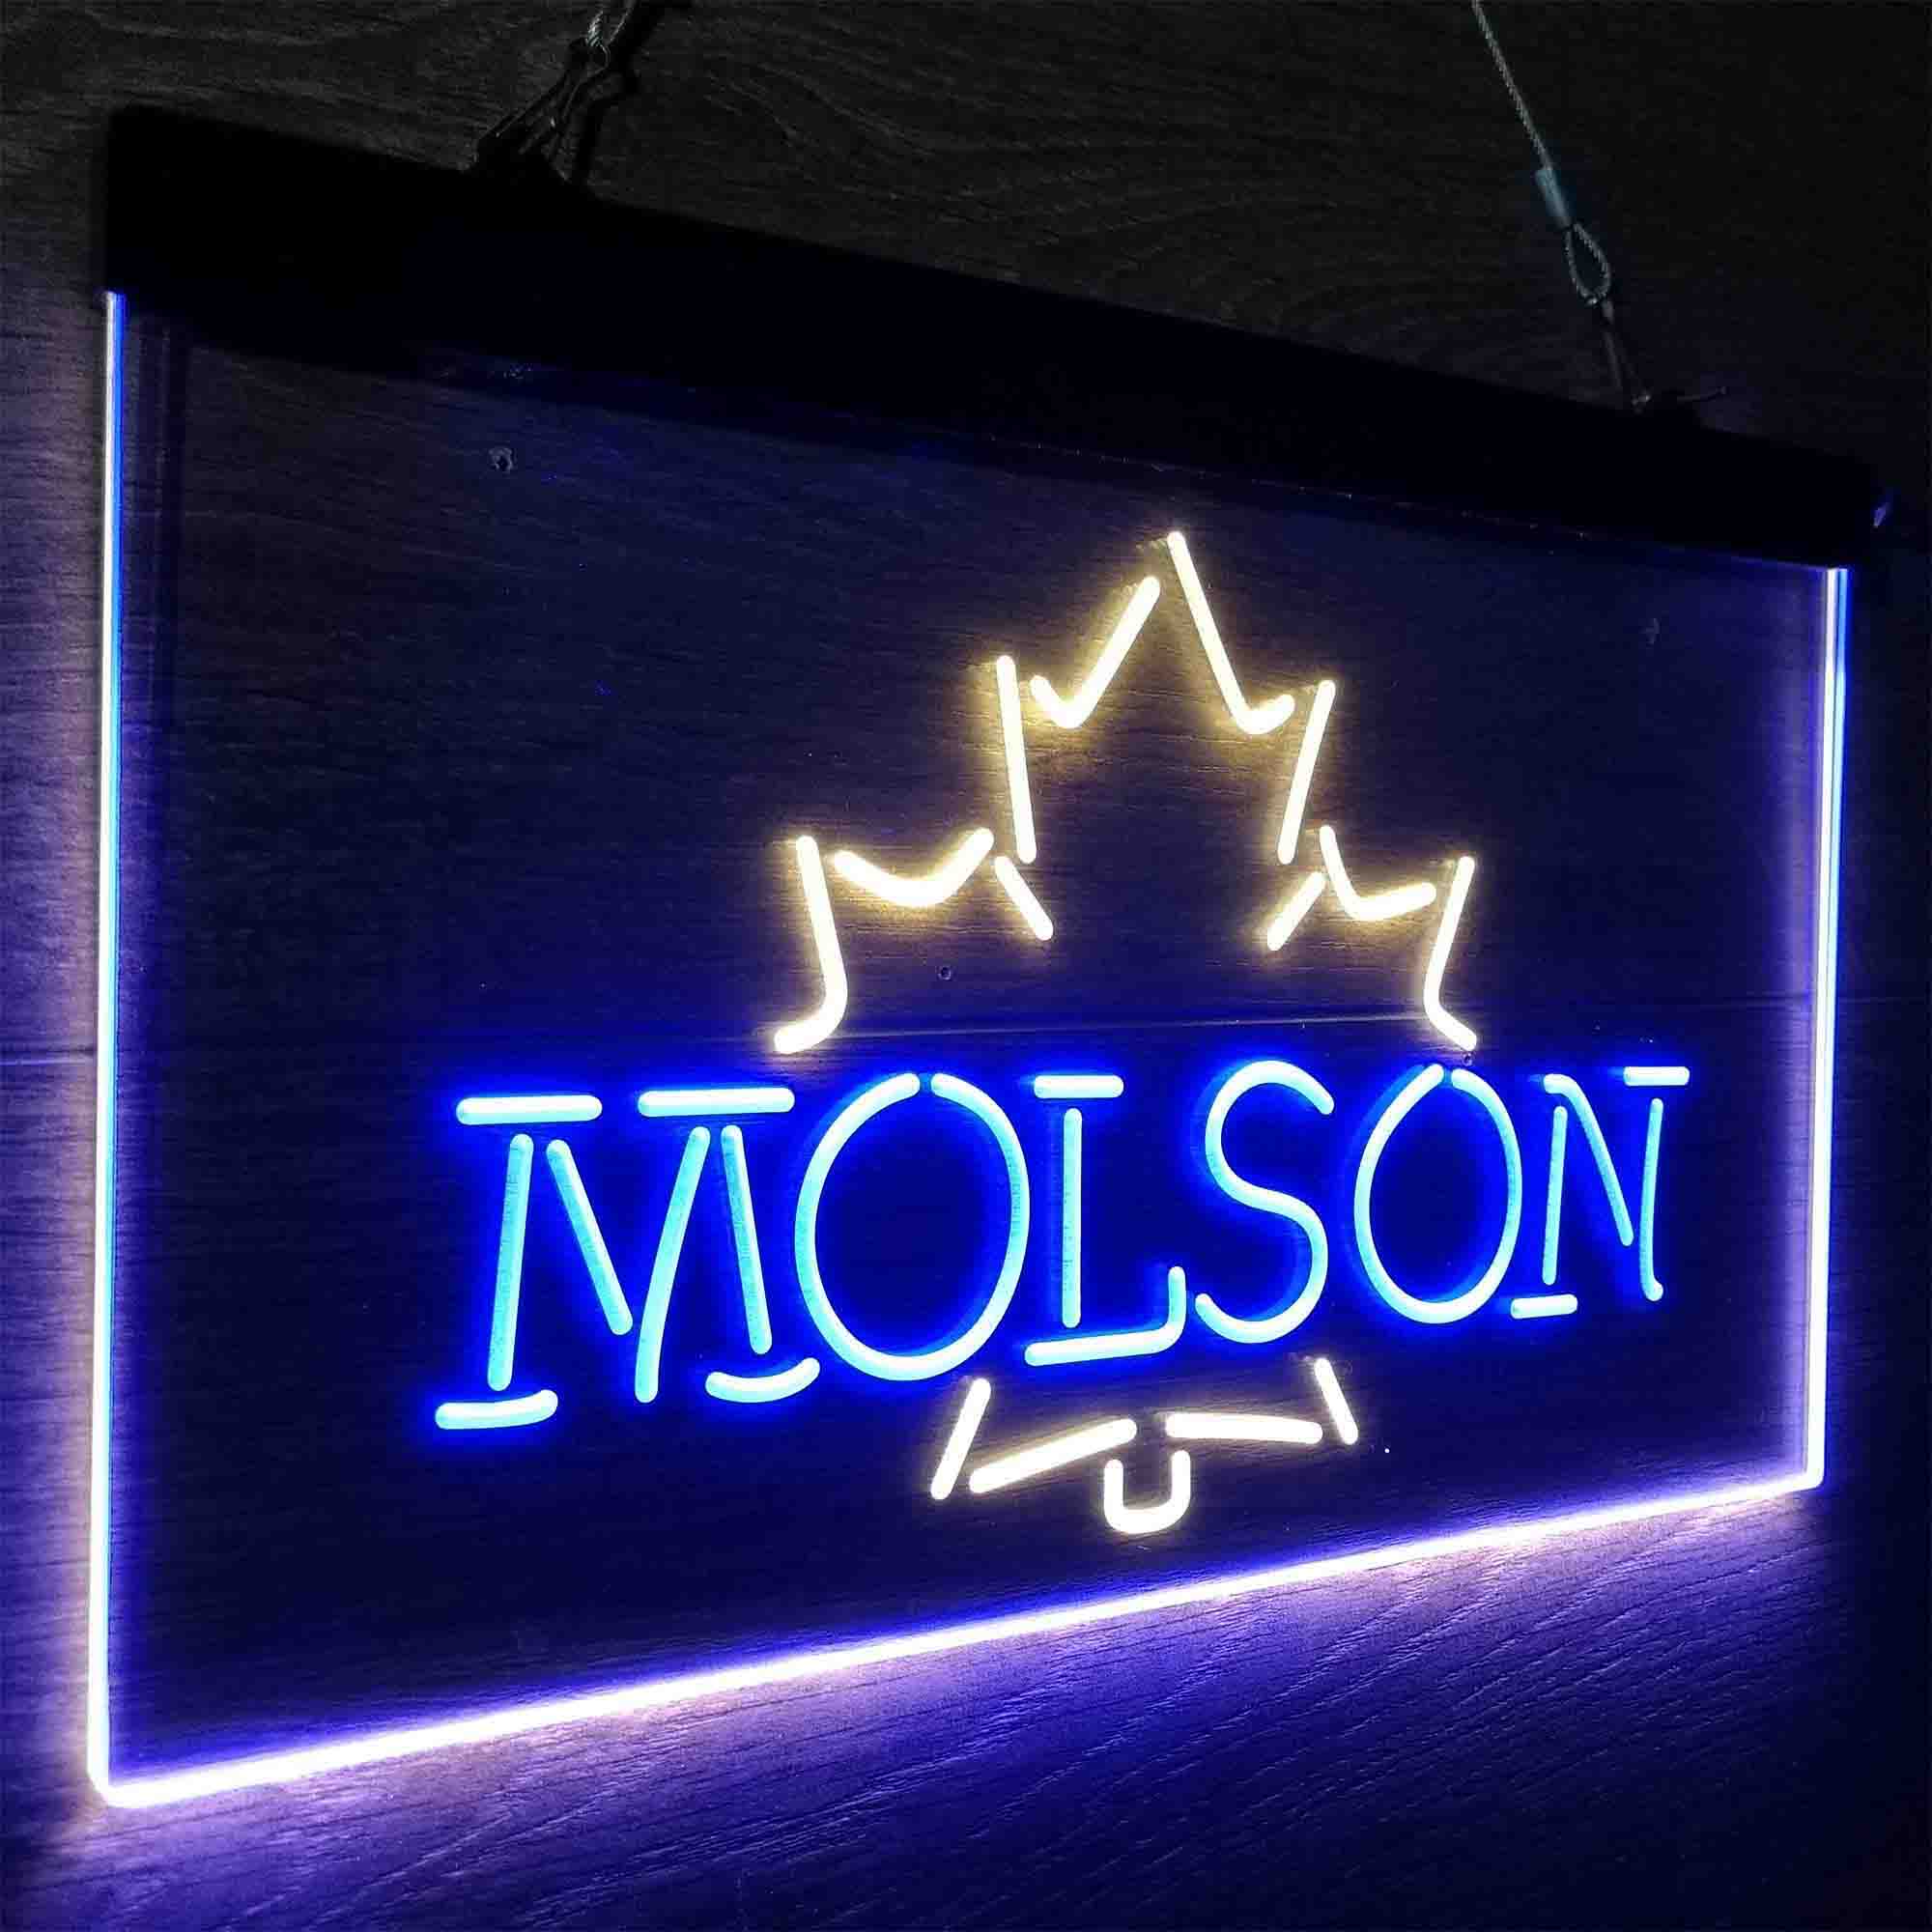 Molson Beer LED Neon Sign